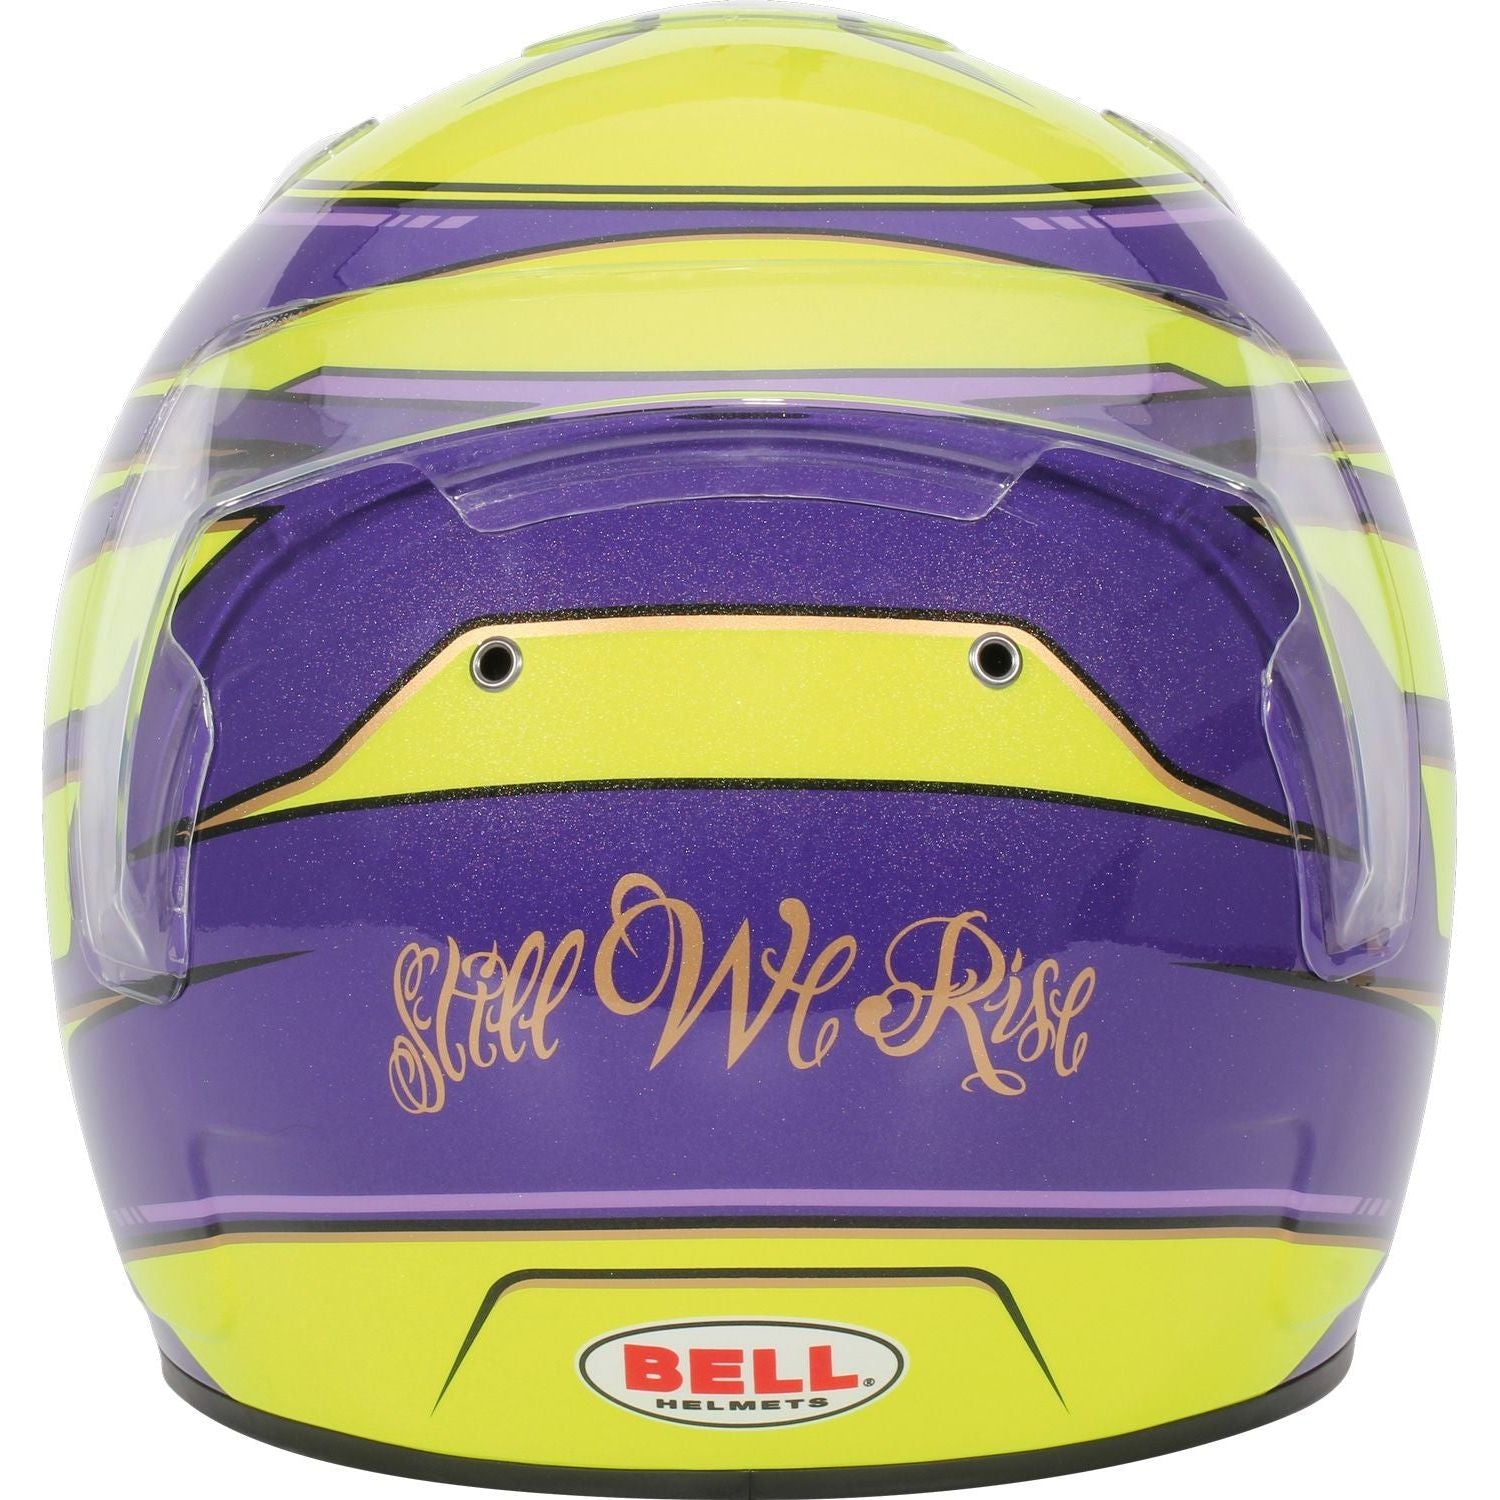 BELL Helmet KC7 CMR Lewis Hamilton